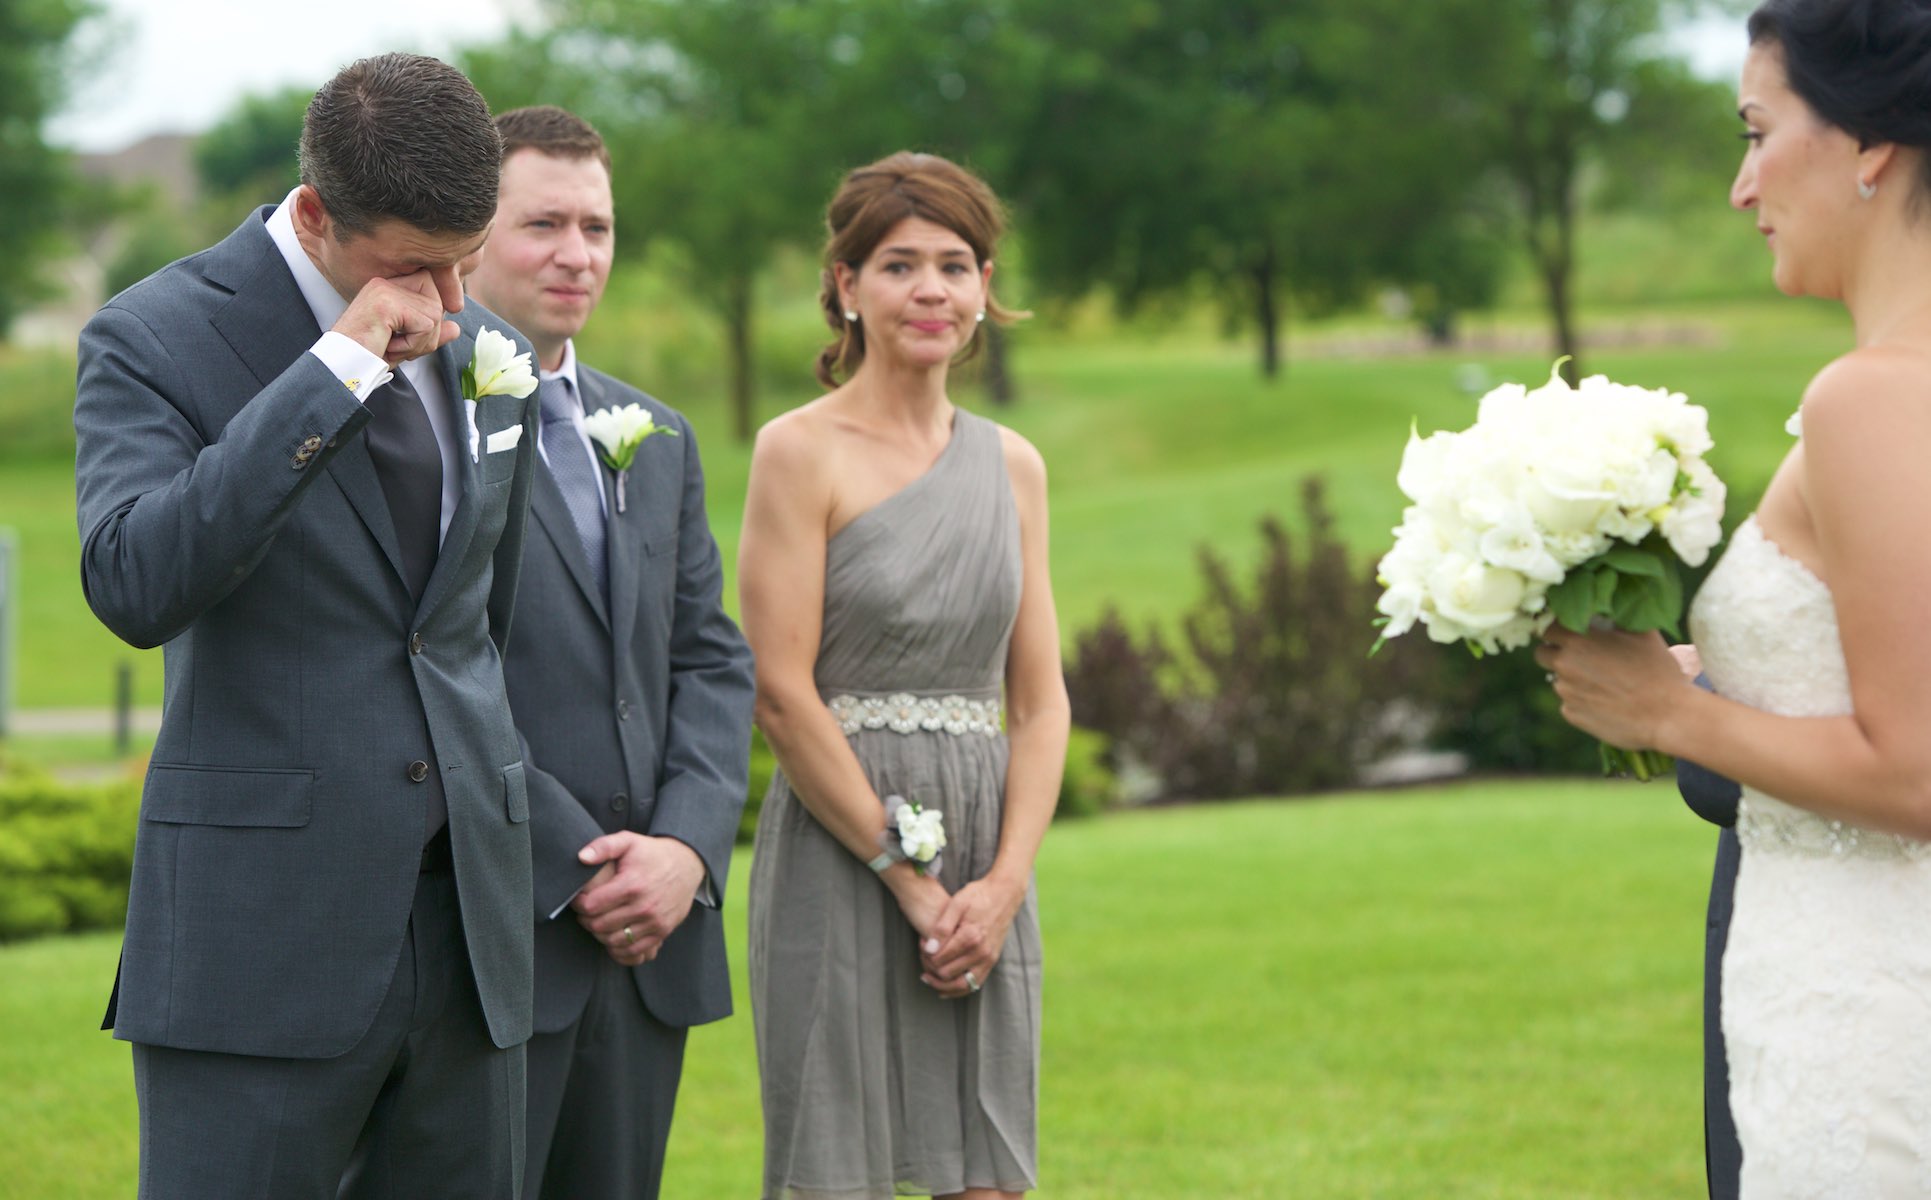 Daniel reacts as Emi comes down the aisle, wedding ceremony at Geneva National Golf Club in Lake Geneva, Wisconsin. Wedding photography by Steve & Tiffany Warmowski.